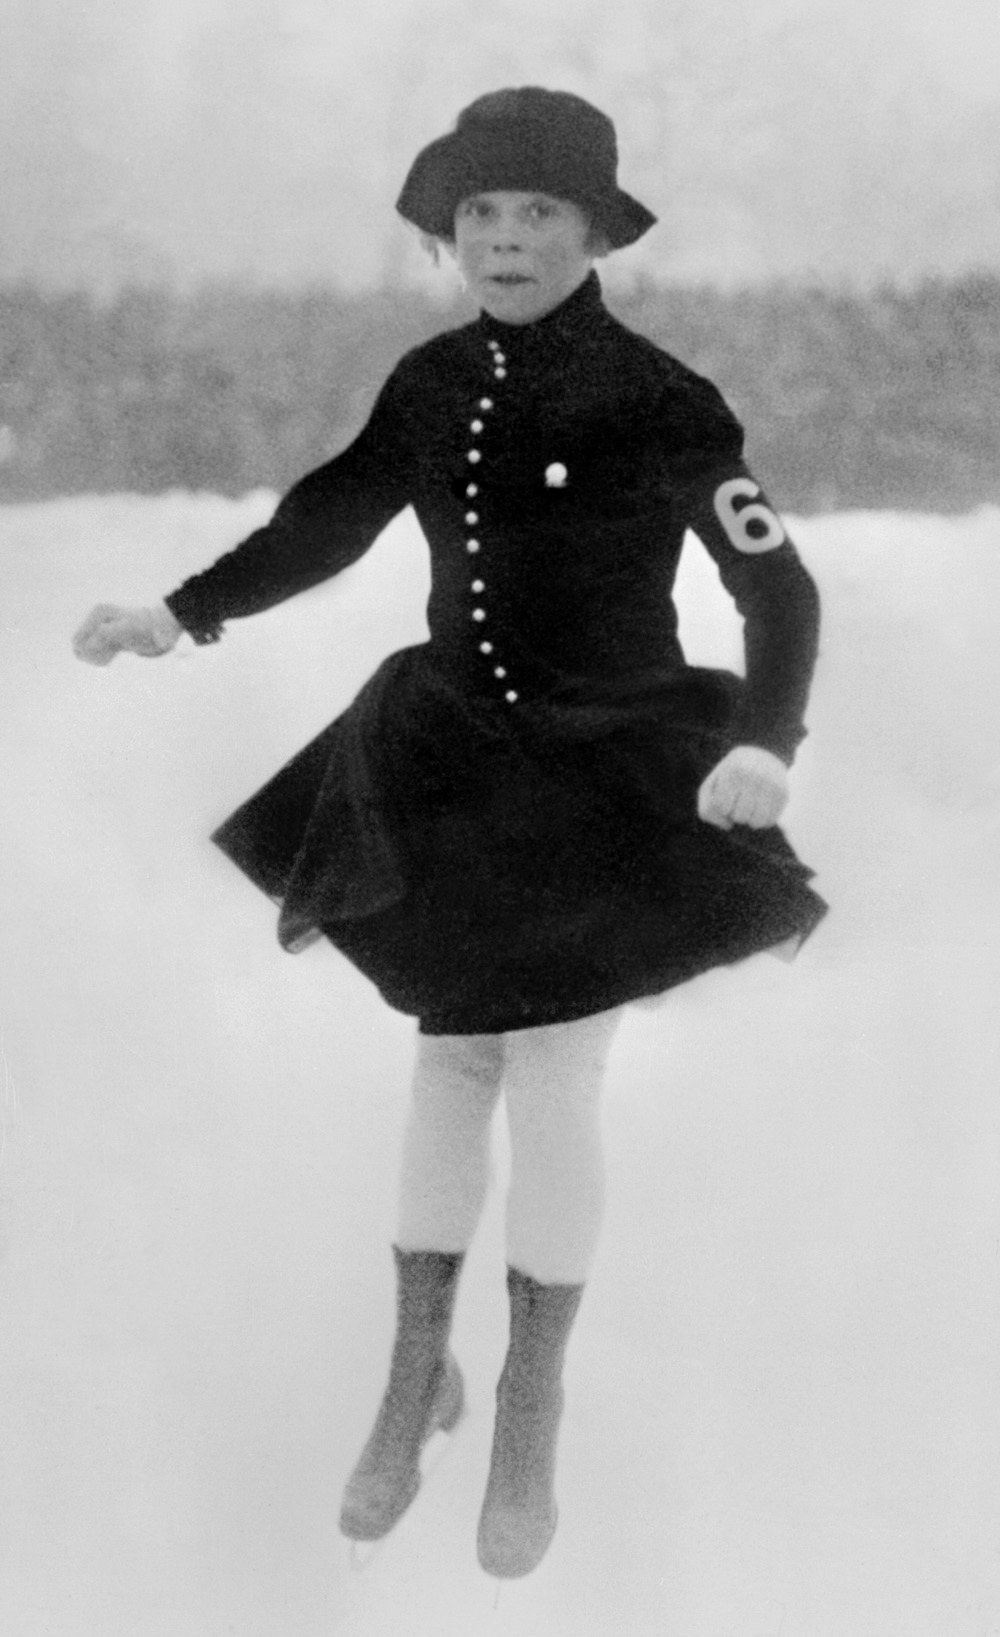 Norwegian figure skater Sonja Henie practices during the Winter Olympic Games on Jan. 29, 1924.